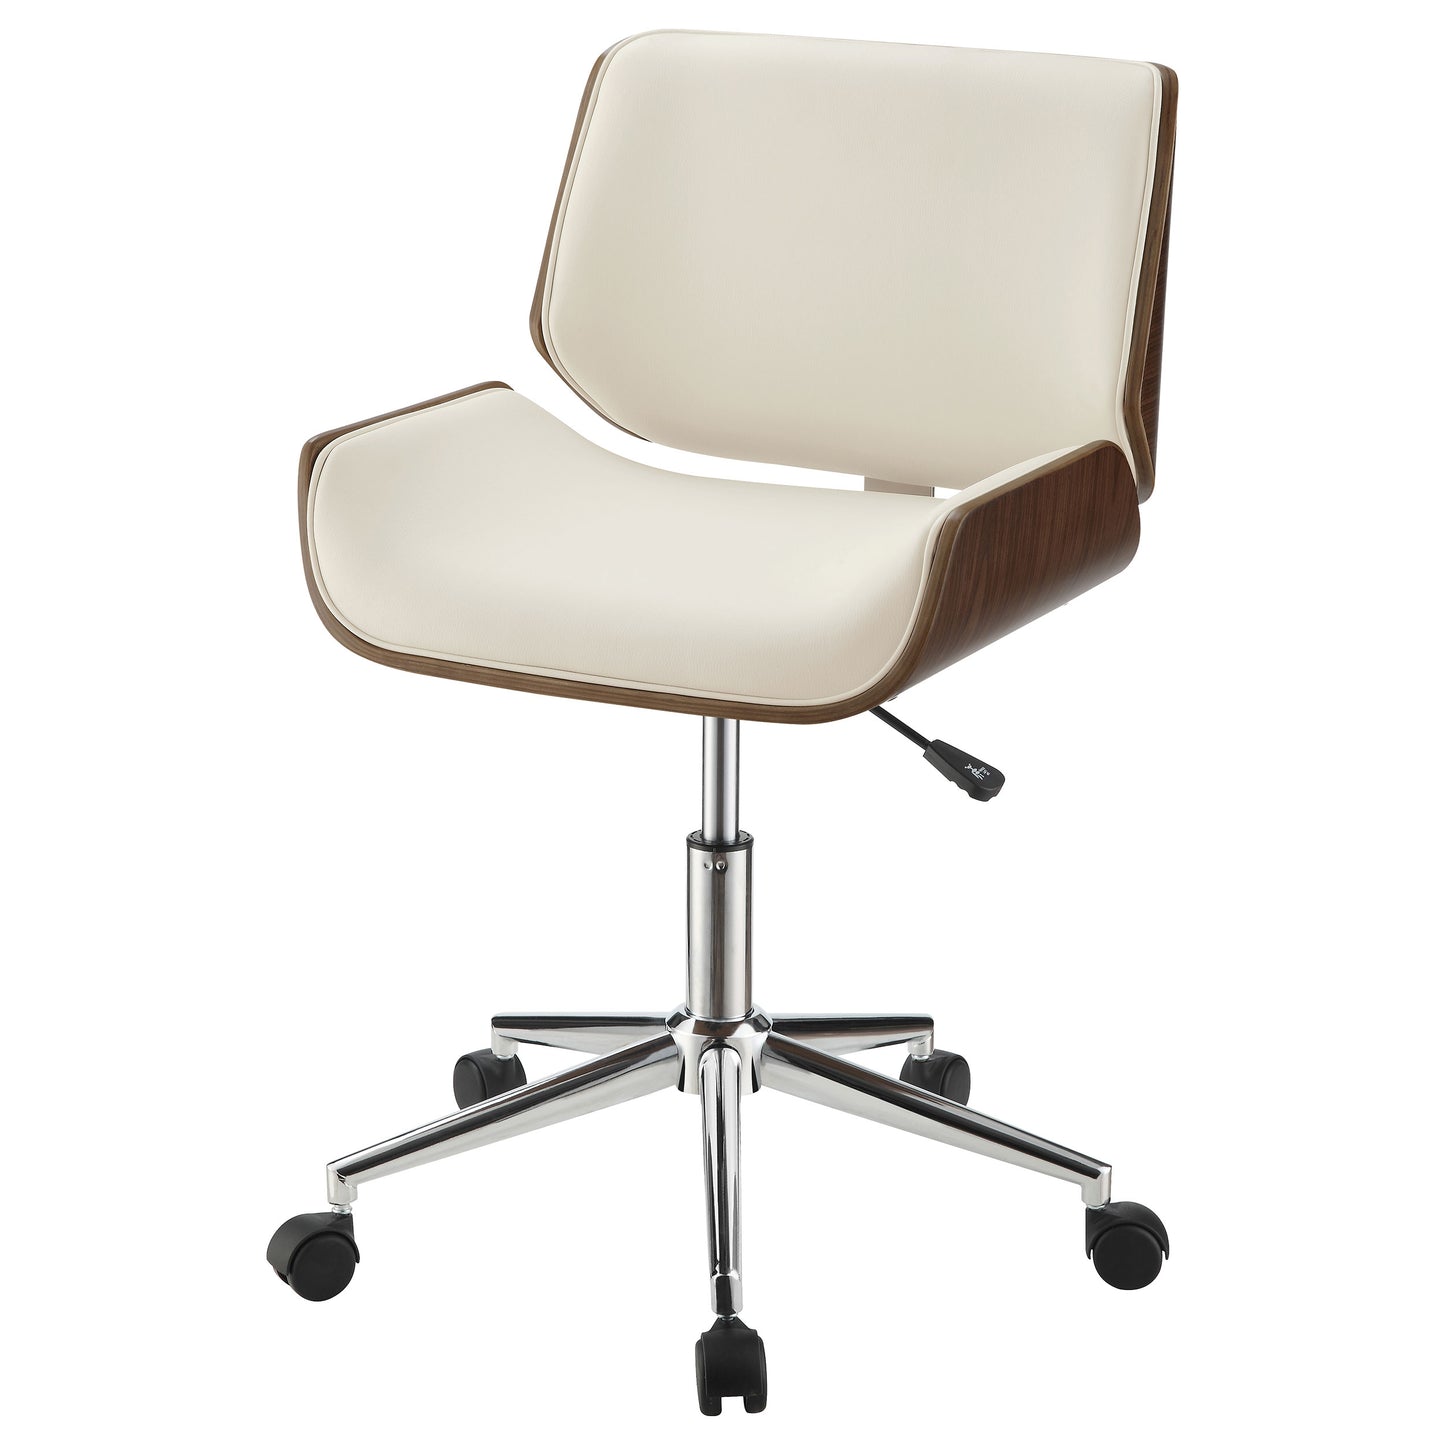 Addington Adjustable Height Office Chair Ecru and Chrome